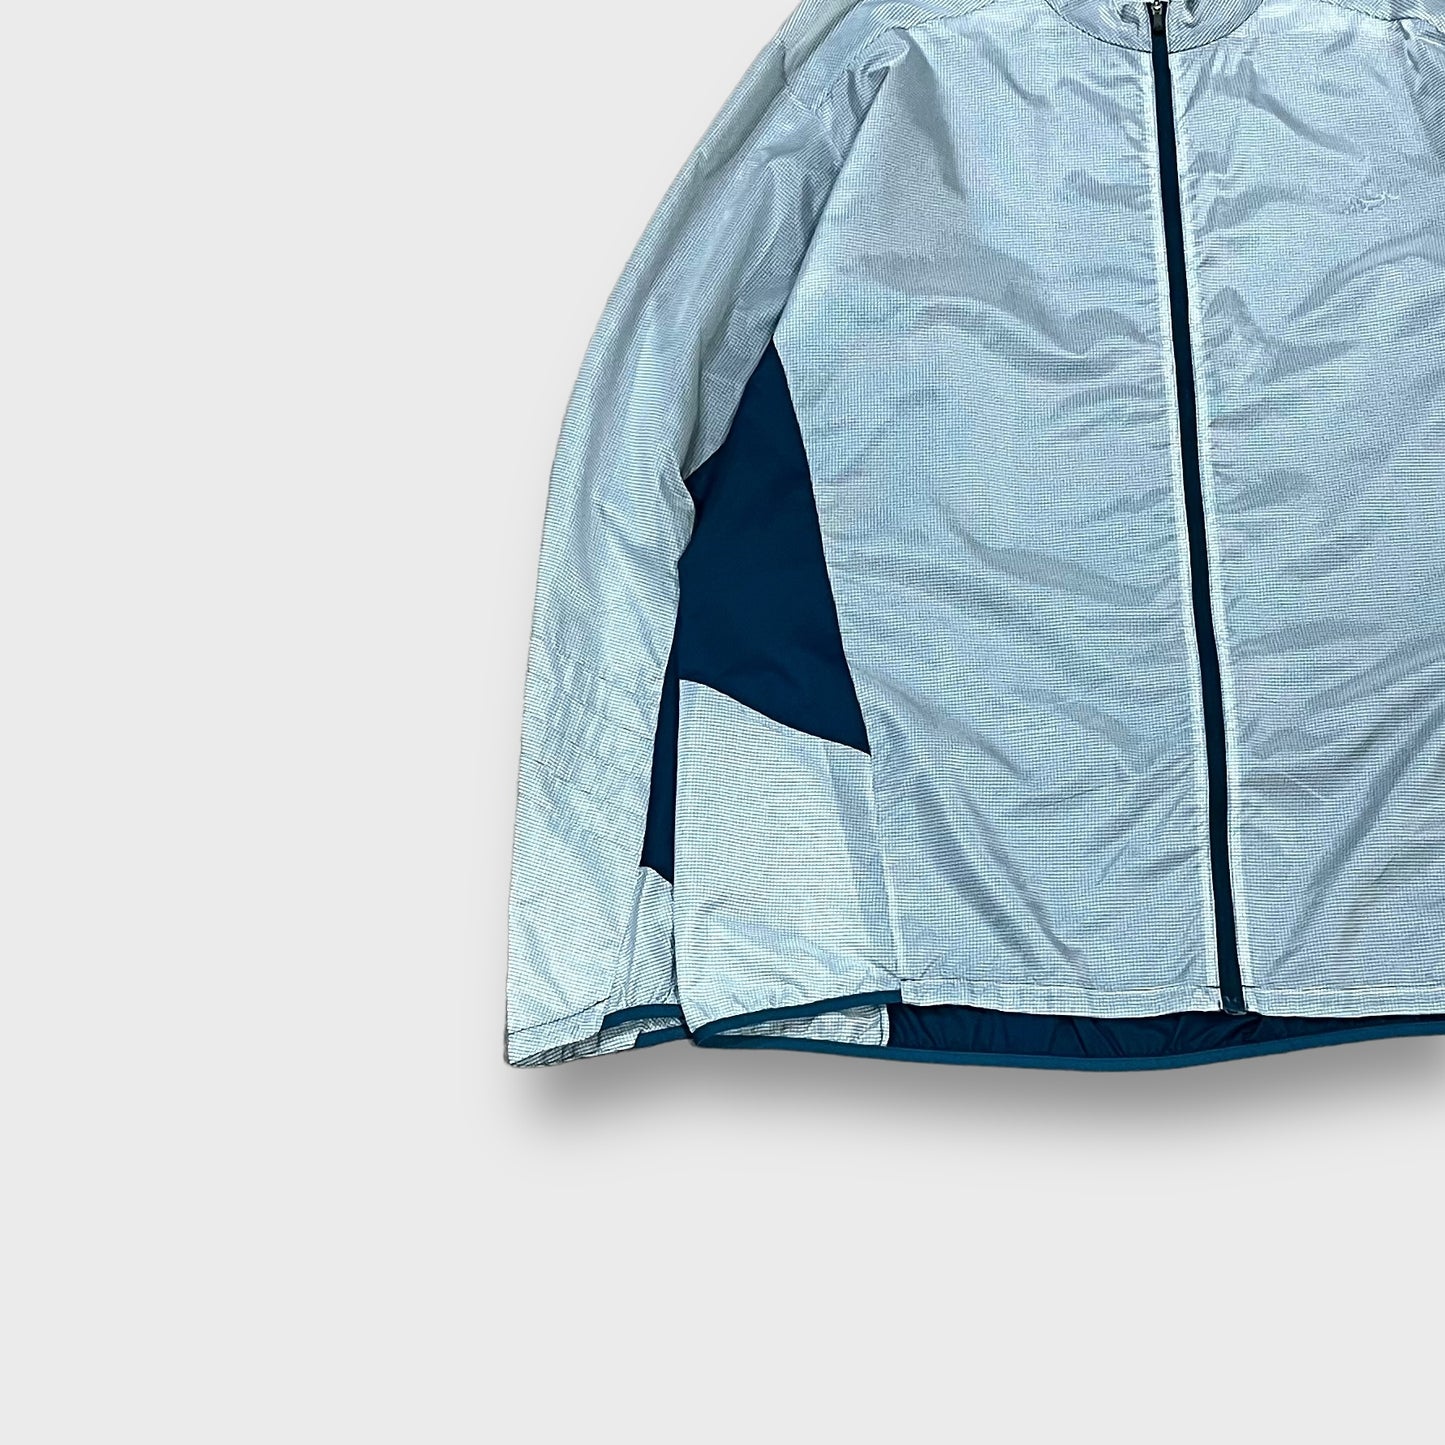 00’s “ARC’TERYX”
zip up nylon jacket